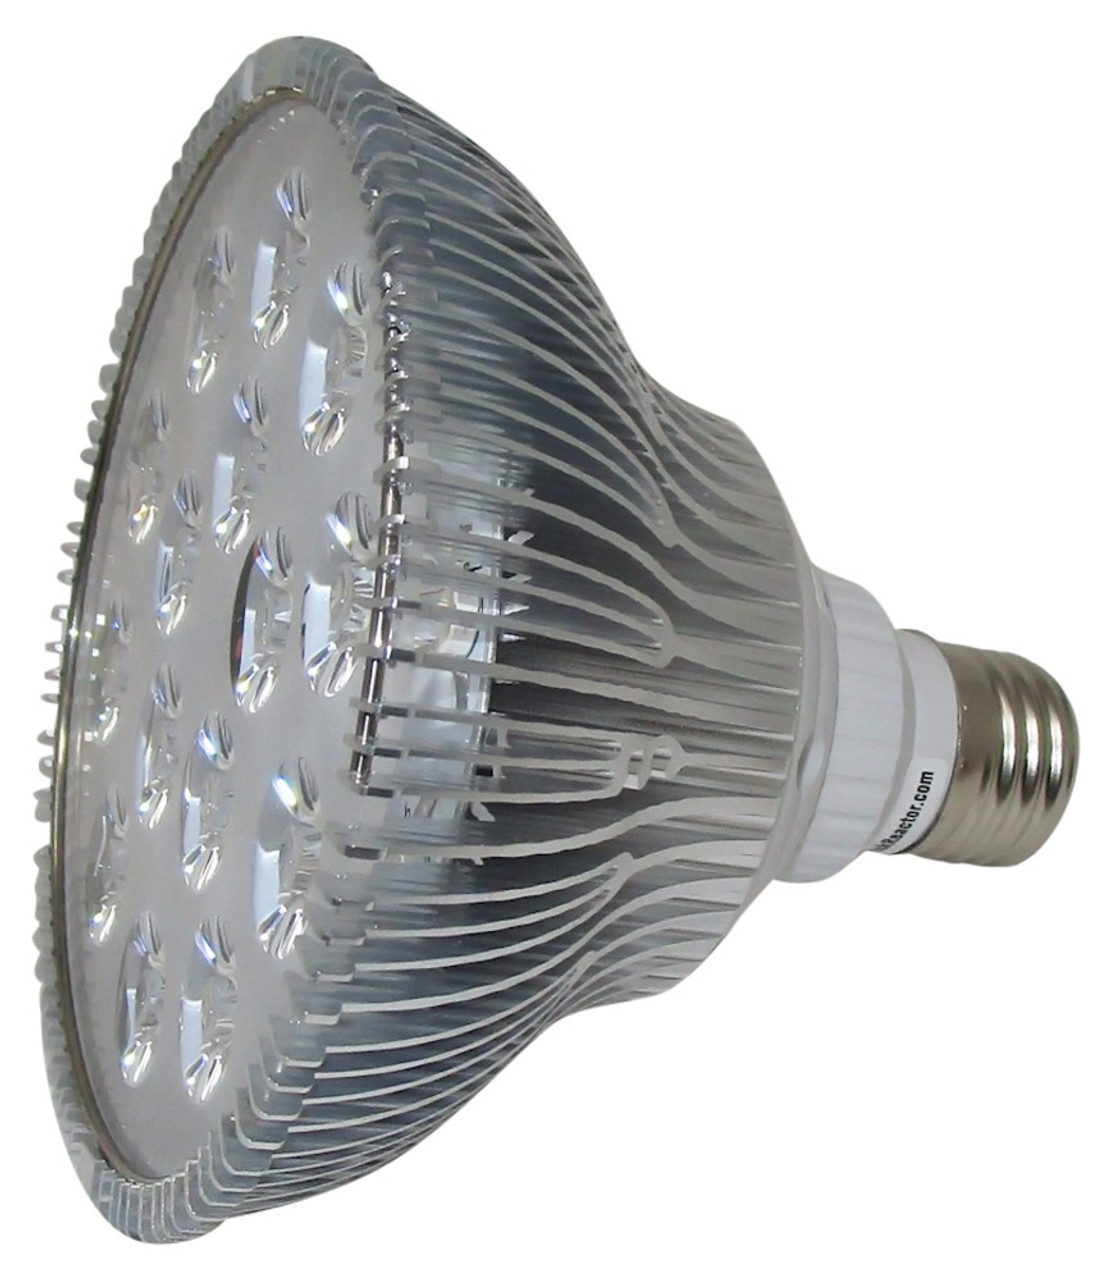 BBB15W-395 fifteen watt 395 NM bulb Par 38